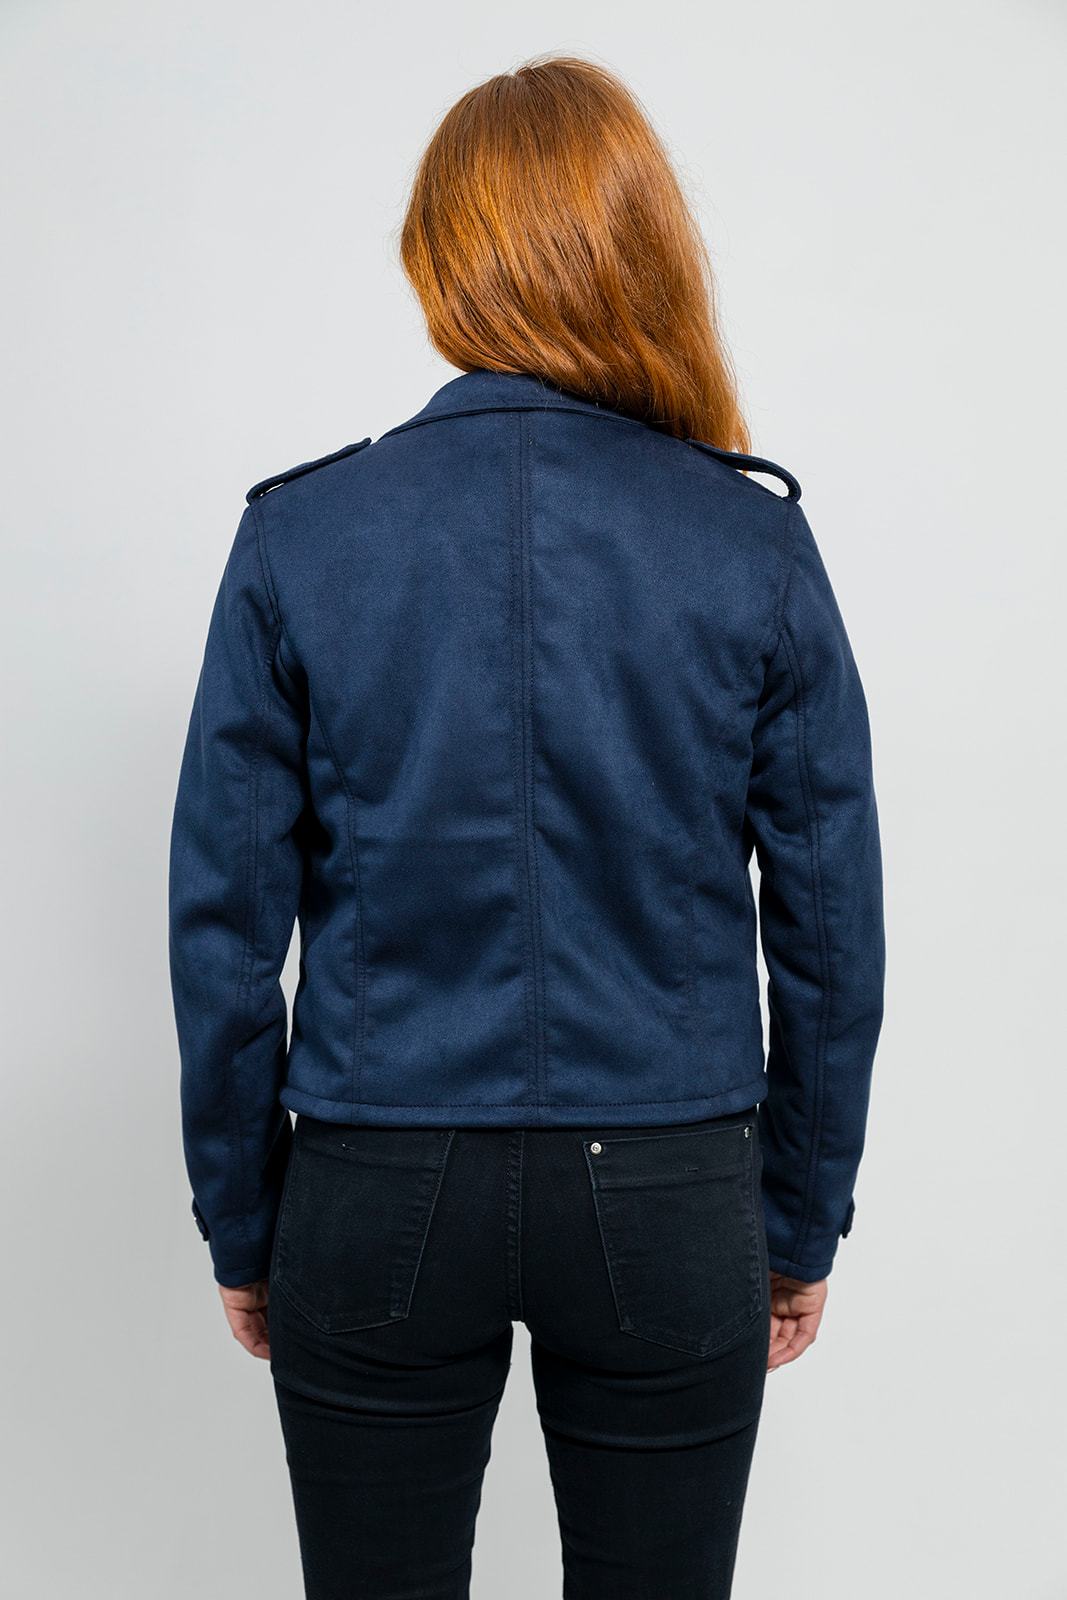 Megan Women's Vegan Faux Leather Jacket Navy Blue (POS) Women's Fashion Leather Jacket Whet Blu NYC   